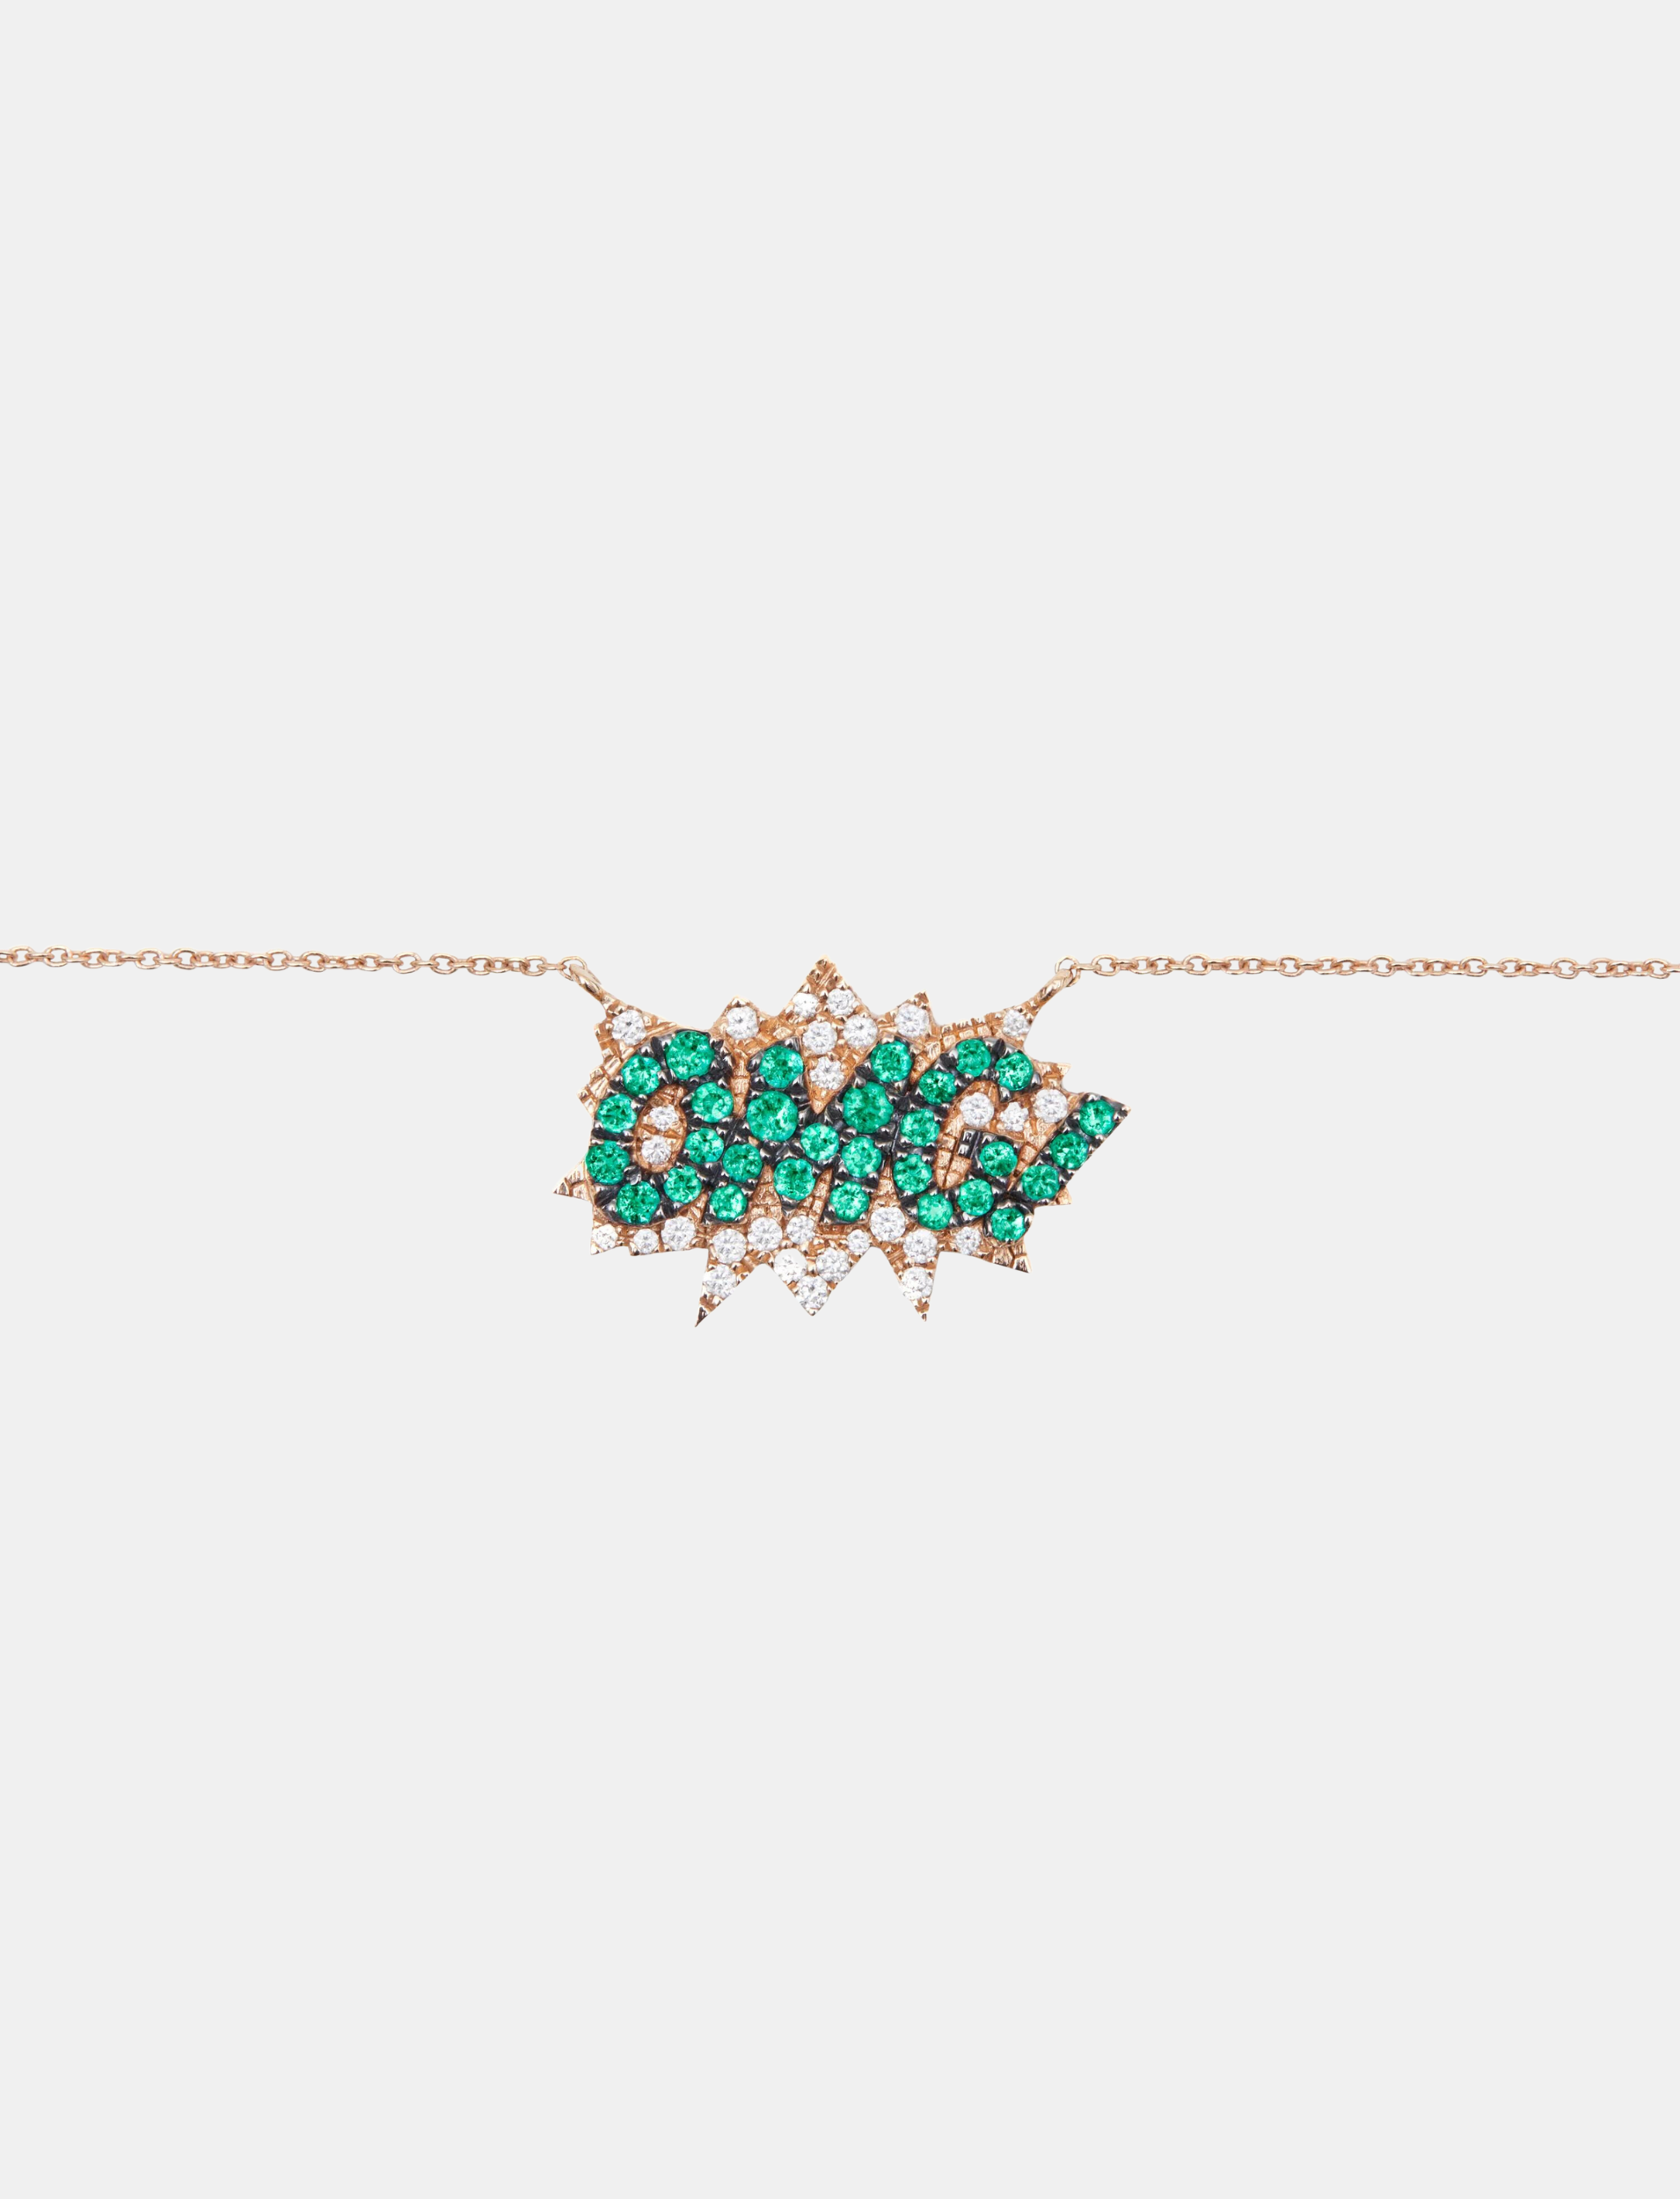 OMG Pop Art Necklace in Green Emeralds